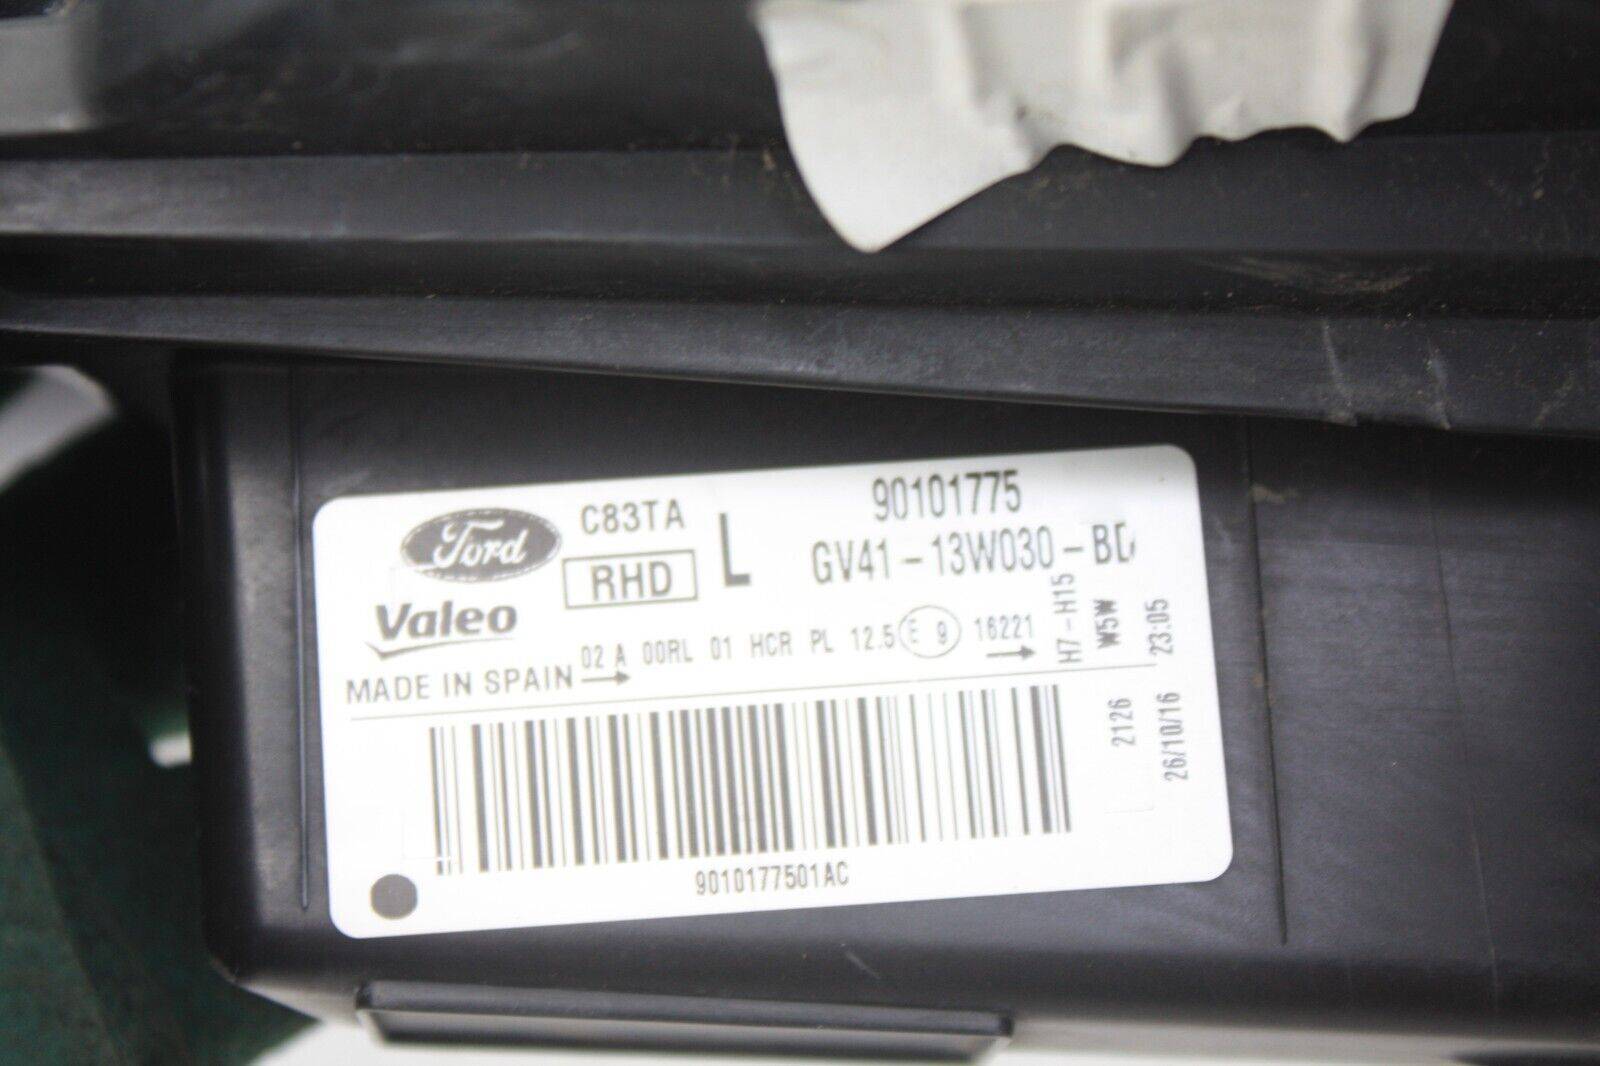 Ford-Kuga-Left-Side-Headlight-GV41-13W030-BD-Genuine-DAMAGED-176366870417-11